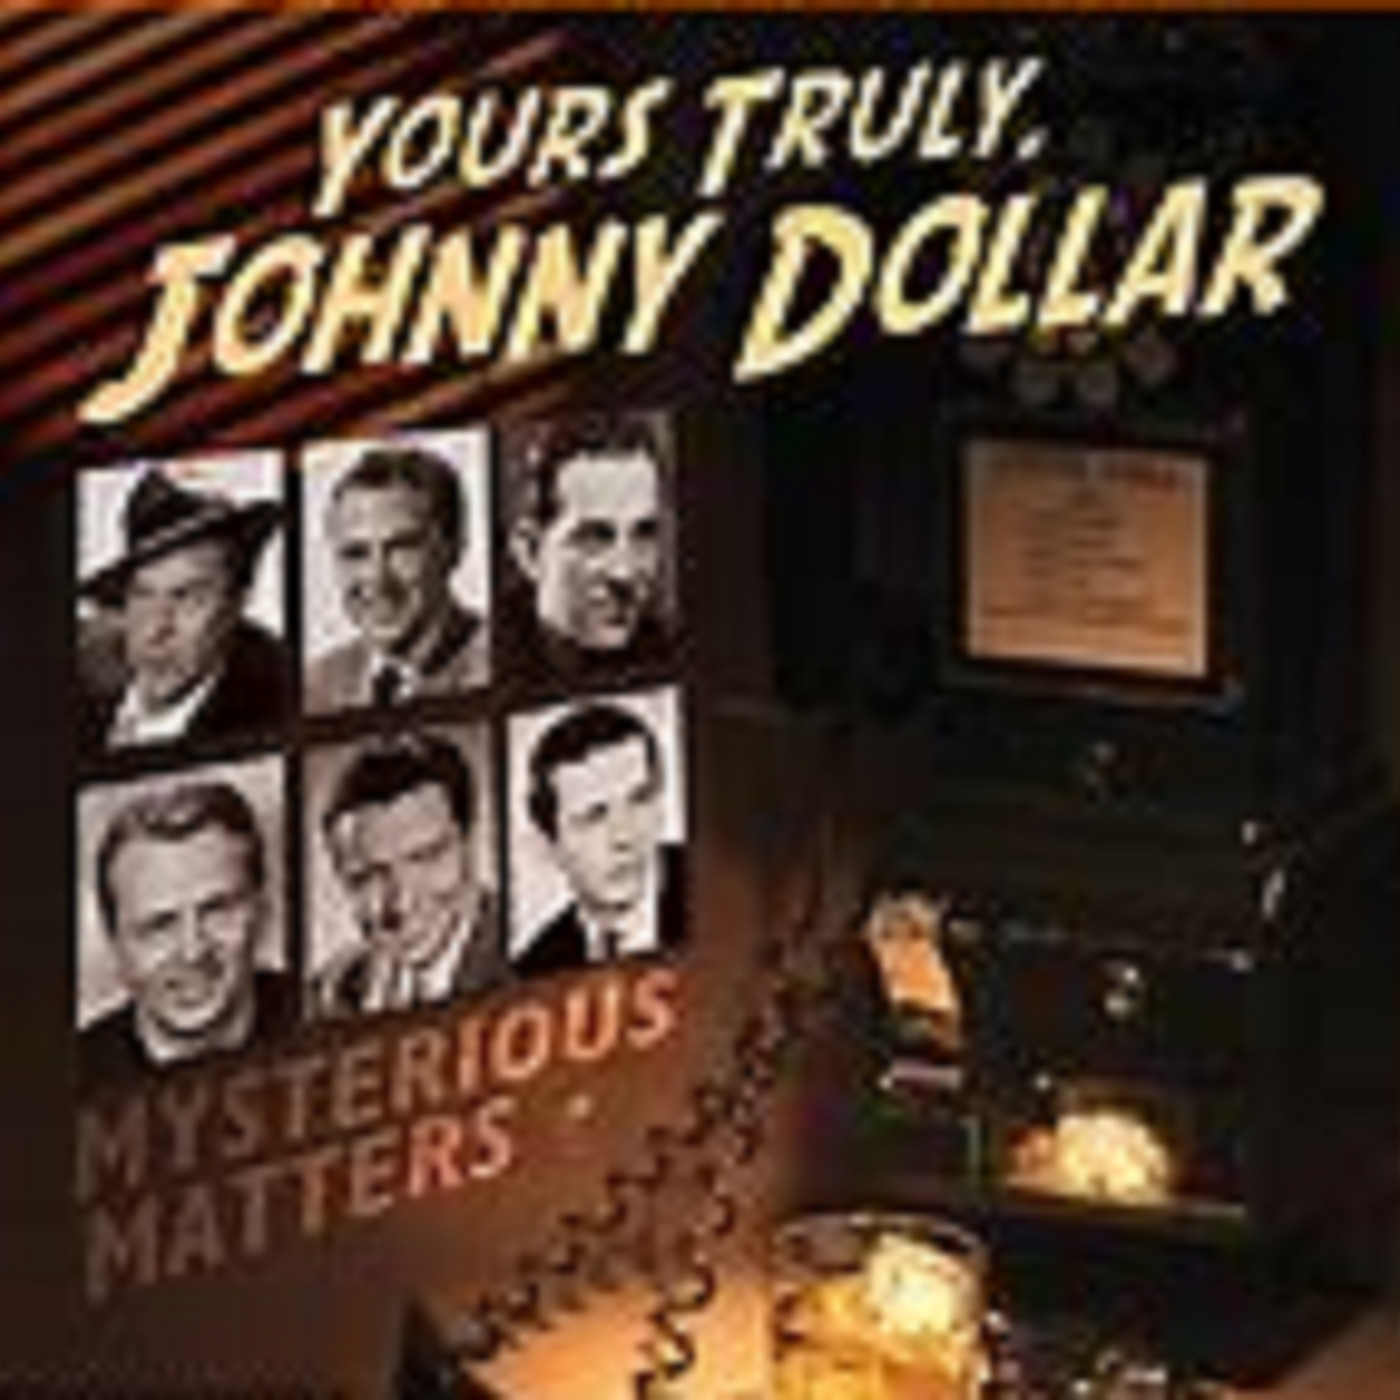 Yours Truly, Johnny Dollar - 060362, episode 794 - The Wayward Gun Matter